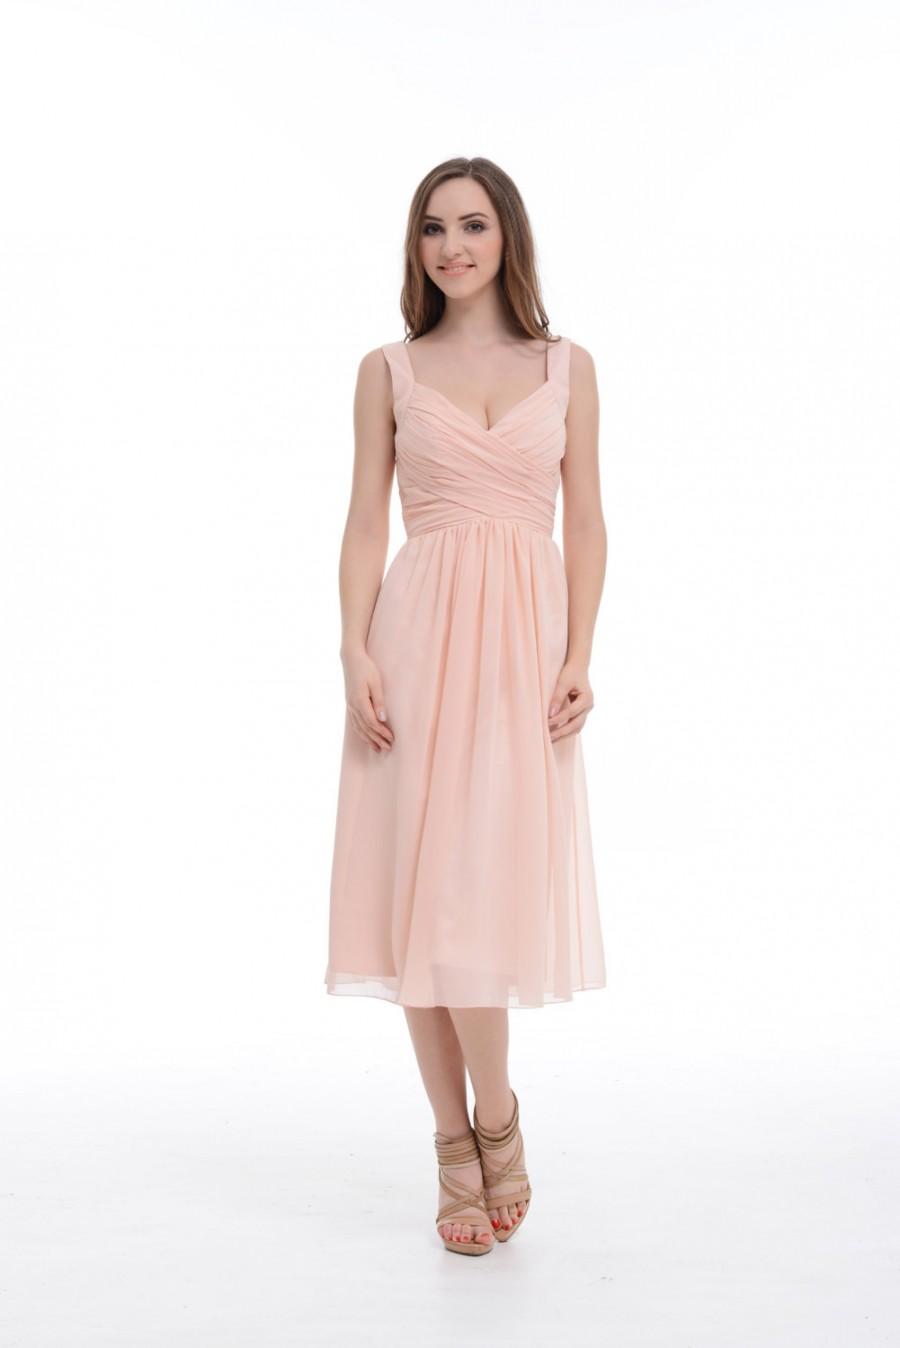 Wedding - Pearl Pink A-Line/Princess V-neck Tea-Length Spaghetti Straps Chiffon Bridesmaid Dress/Homecoming Dress/Prom Dress With Ruffle